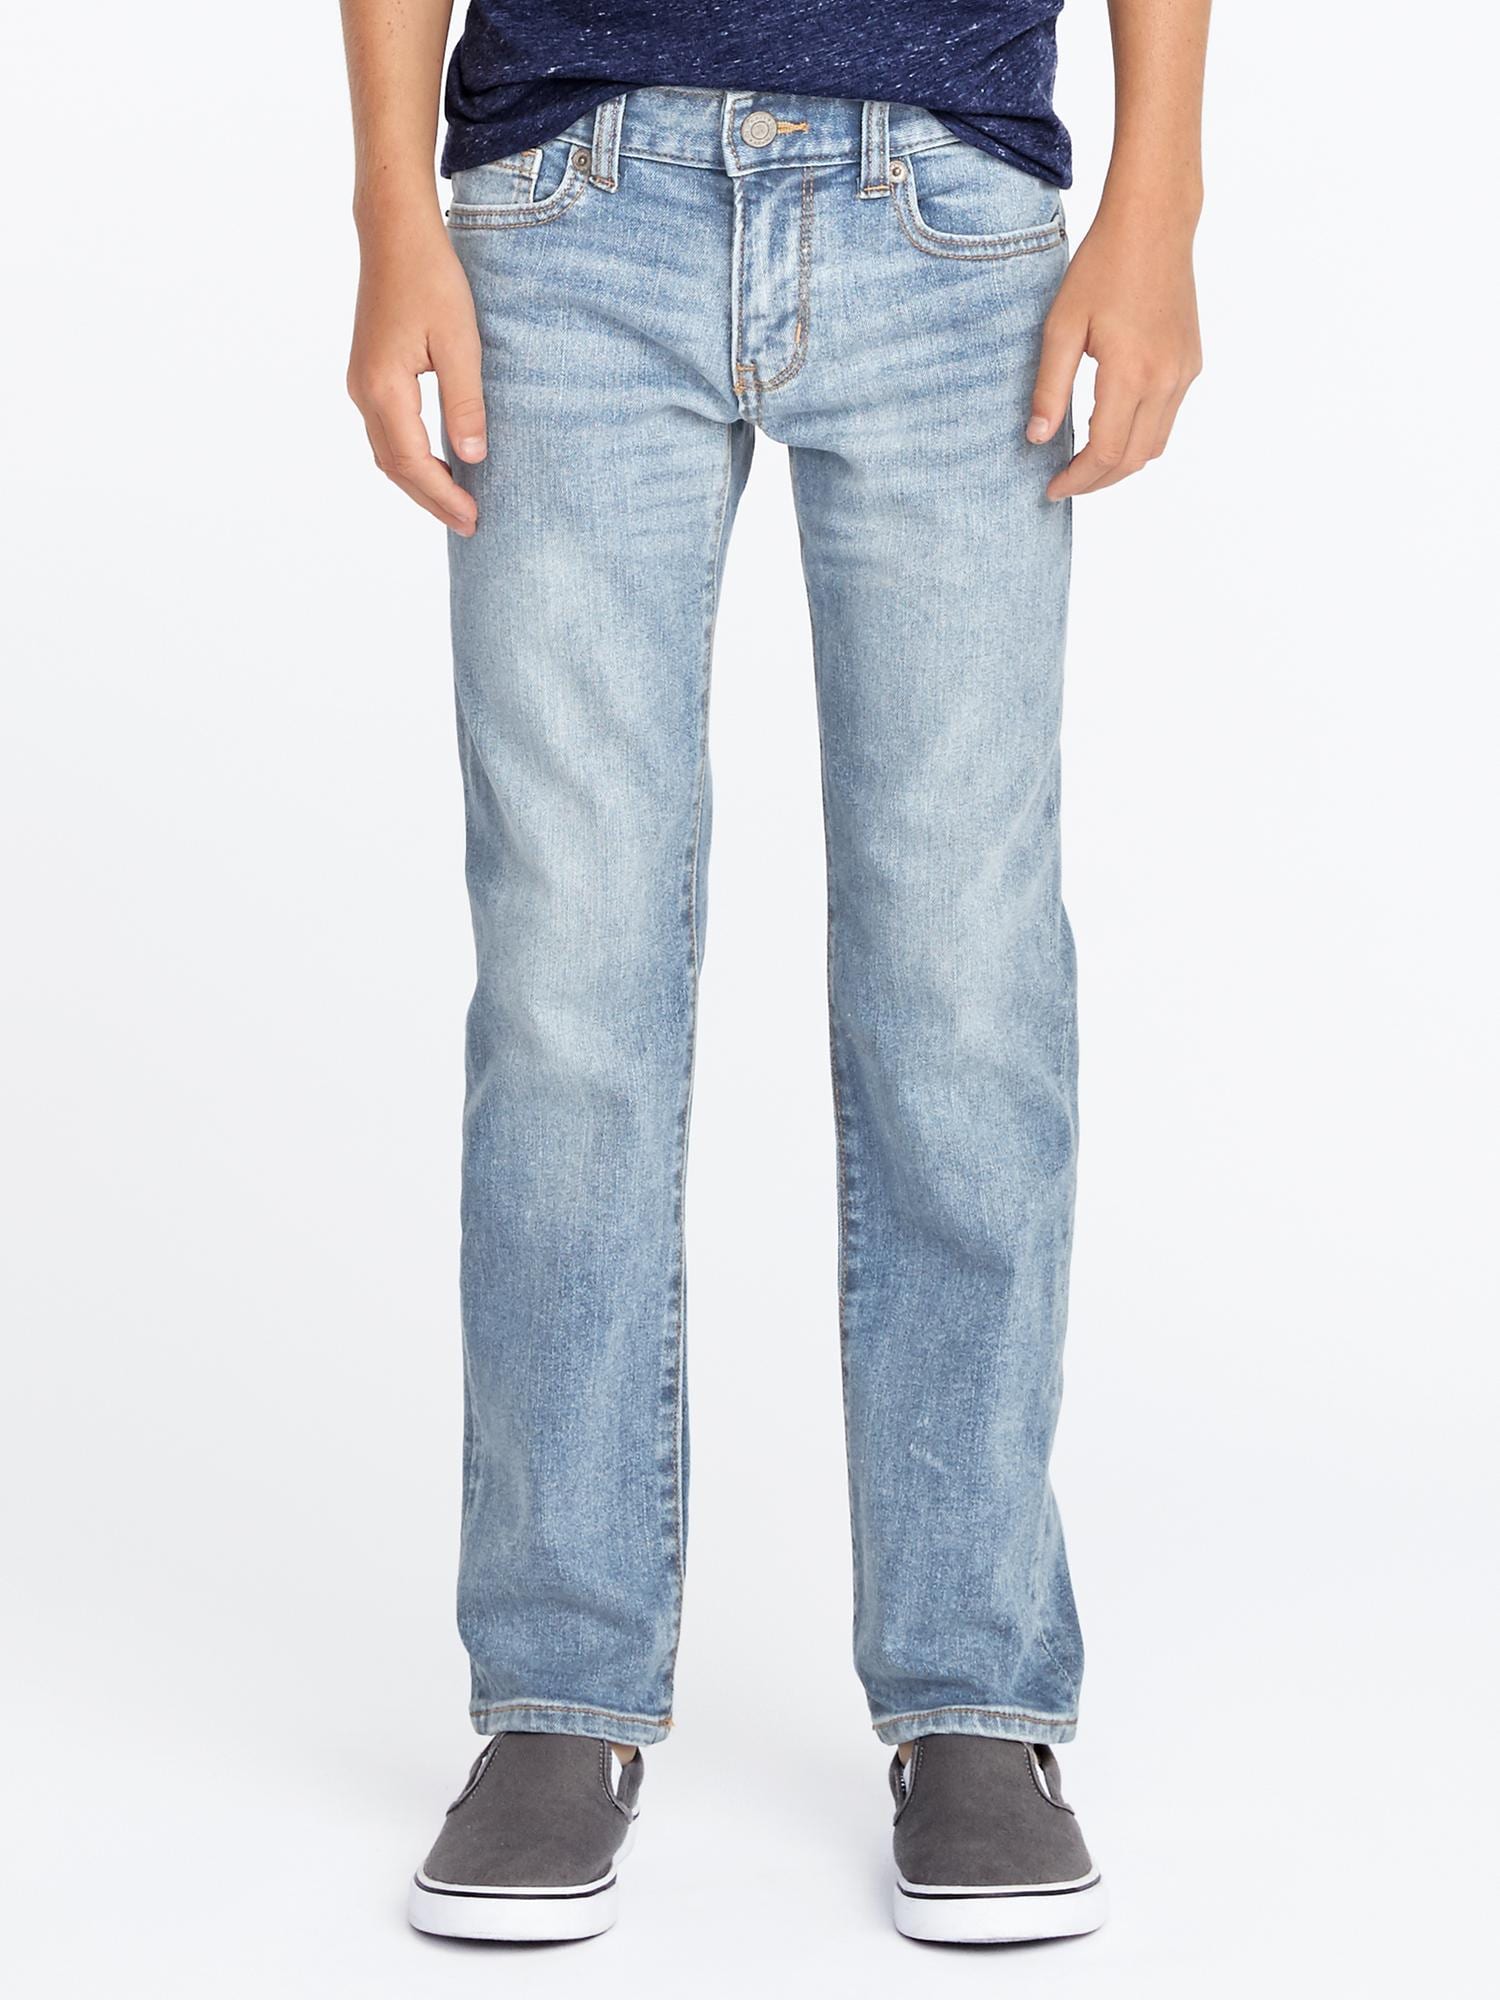 *Hot Deal* Built-In-Flex Skinny Jeans for Boys